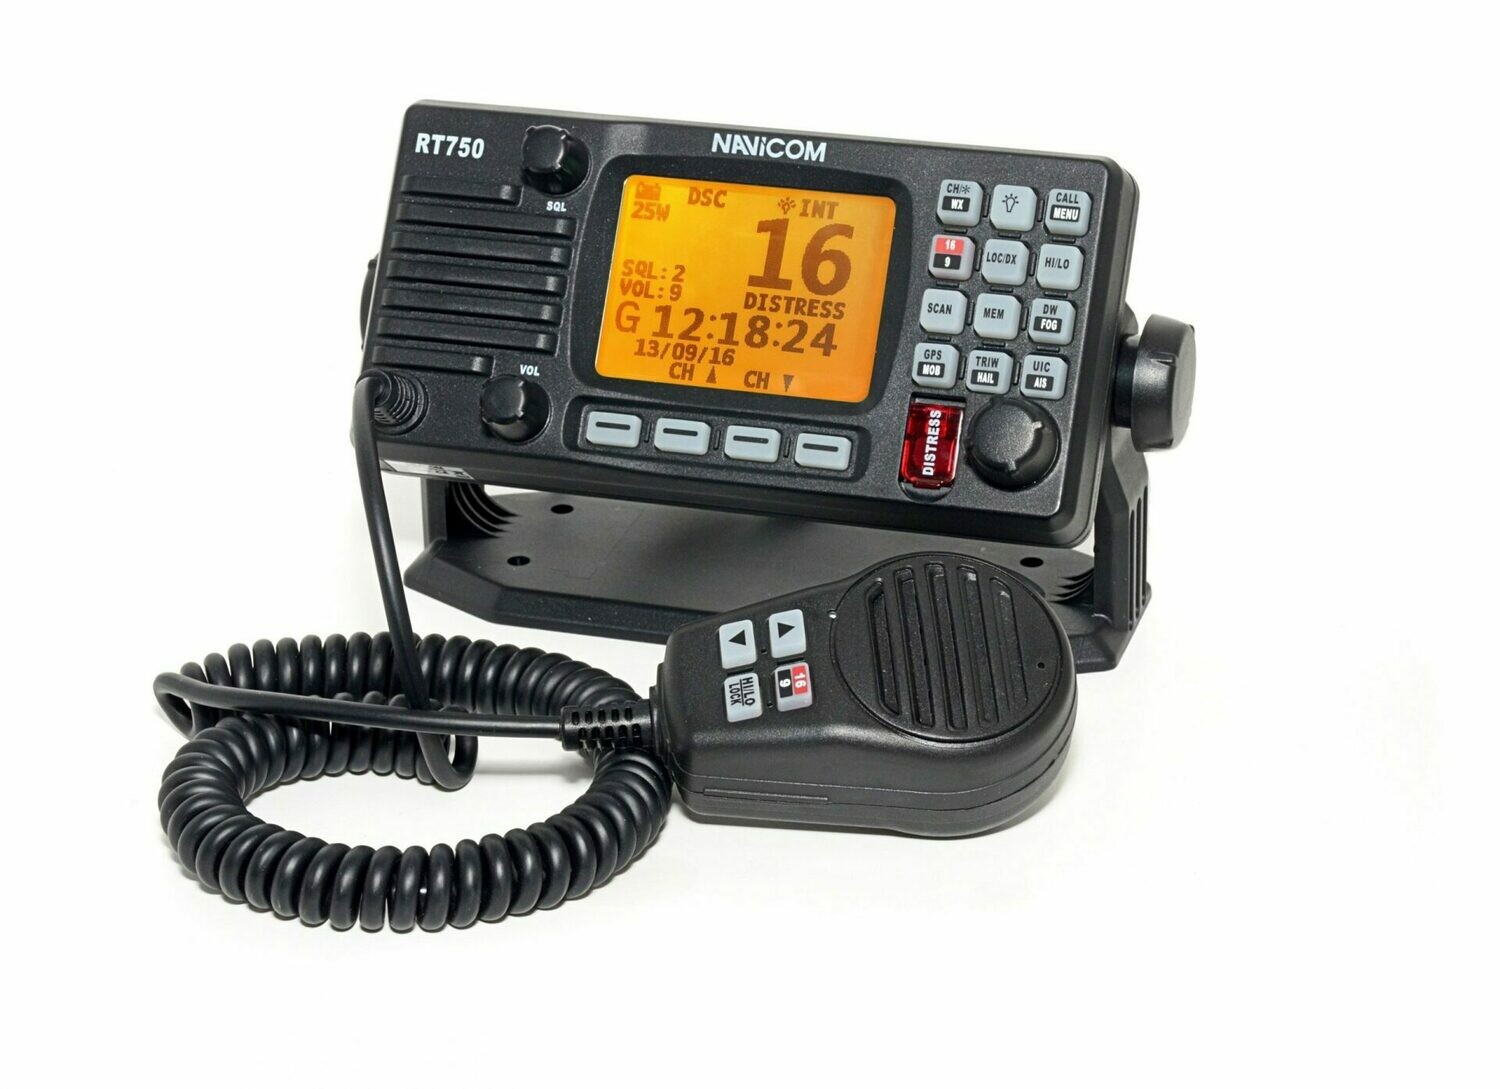 Rádio VHF Navicom RT750 V2 fixo c/ DSC, GPS e ANTENA